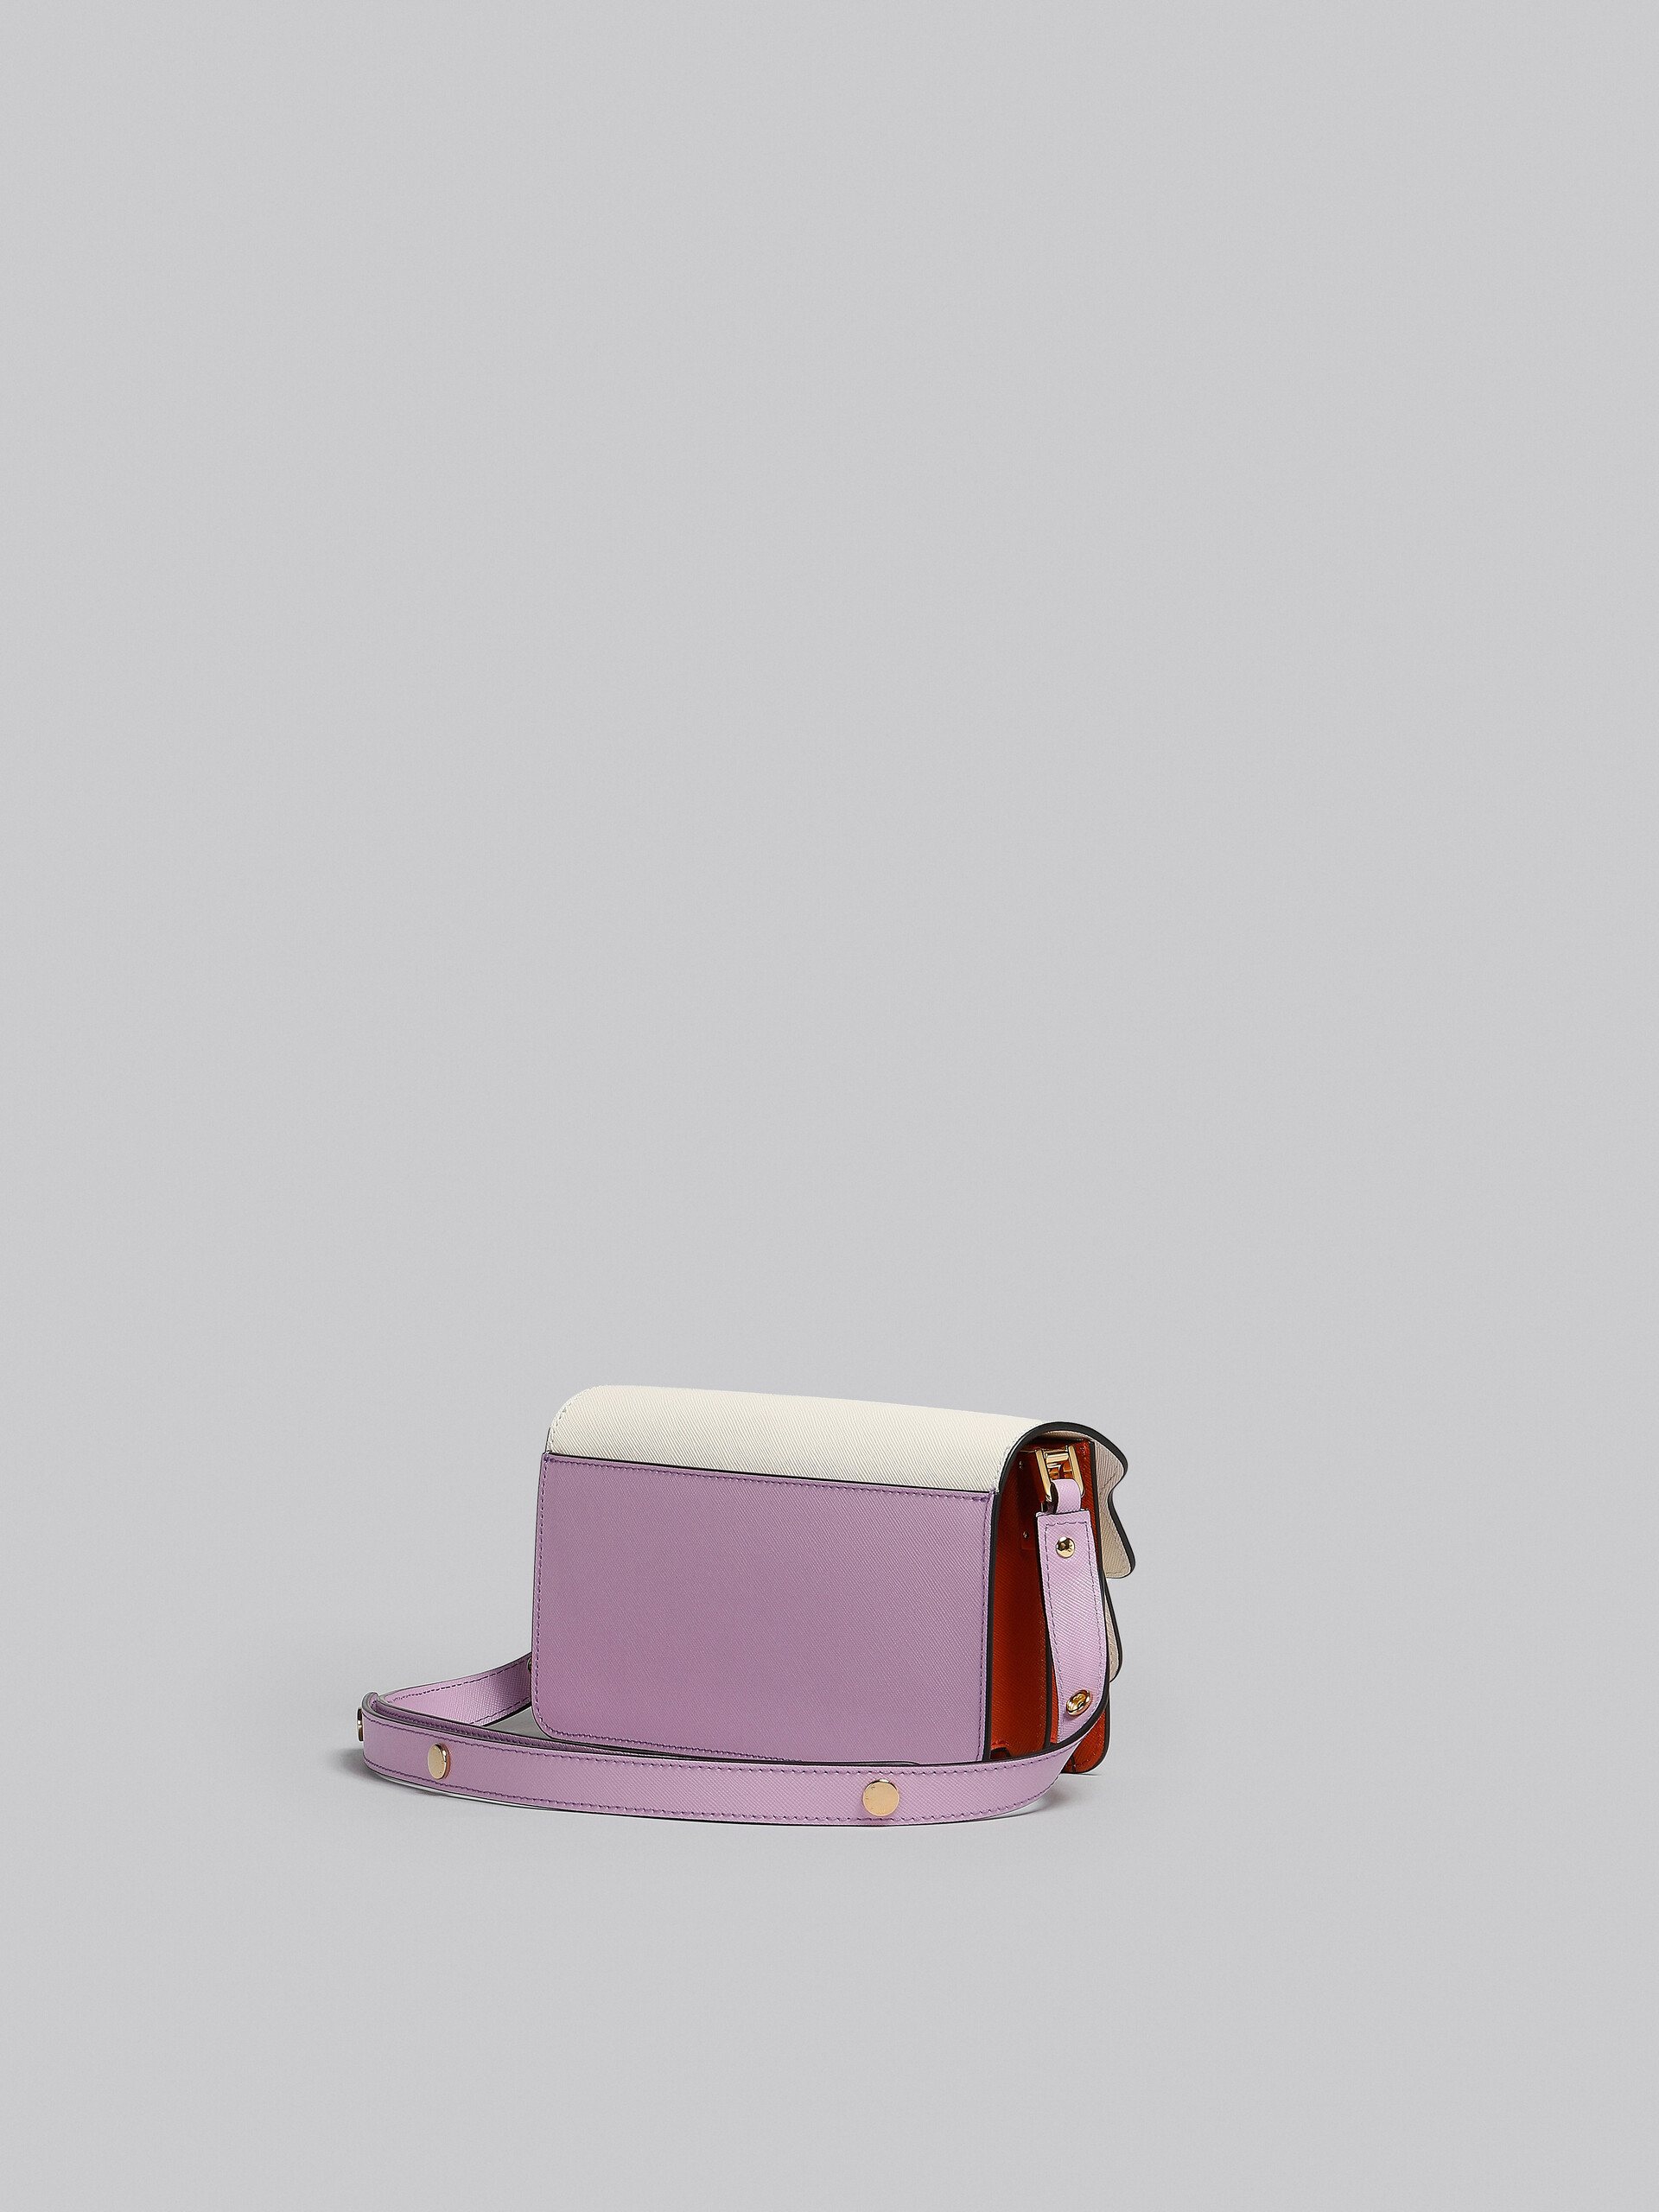 Bolso Trunk horizontal de piel saffiano lila - Bolsos de hombro - Image 3